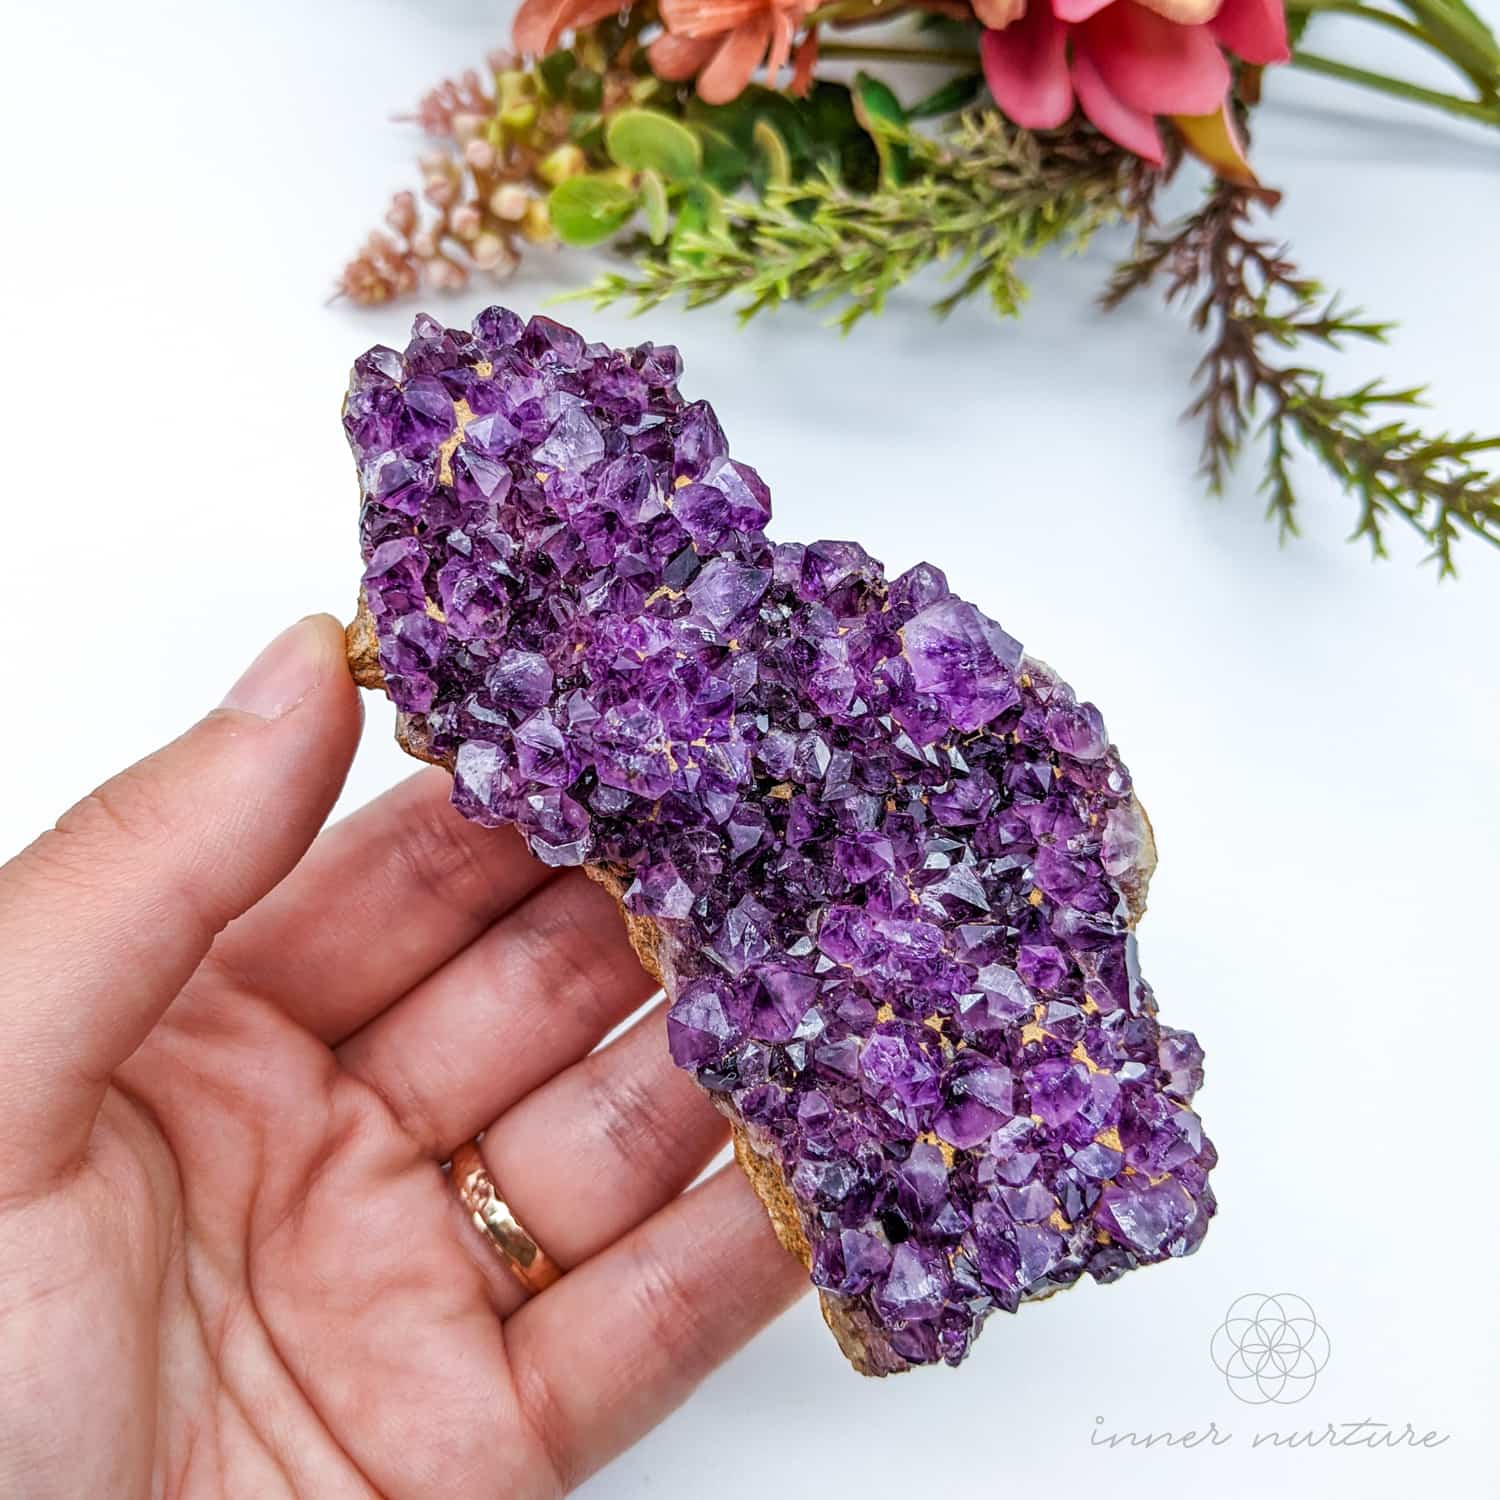 crystals for intuition - amethyst cluster - inner nurture online crystal shop australia